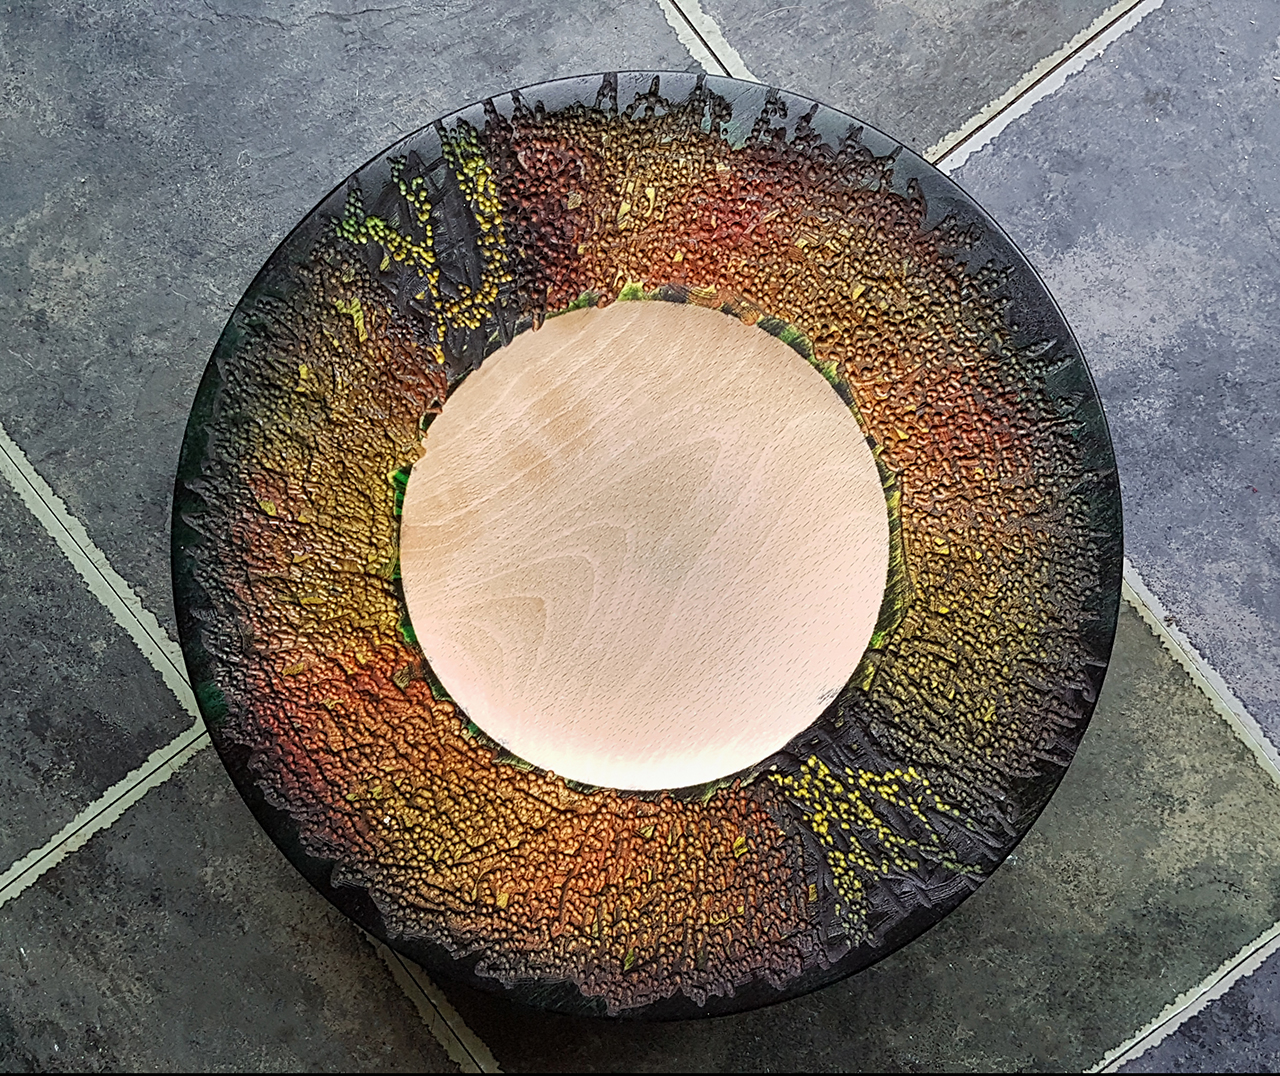 Textured, airbrushed platter rim